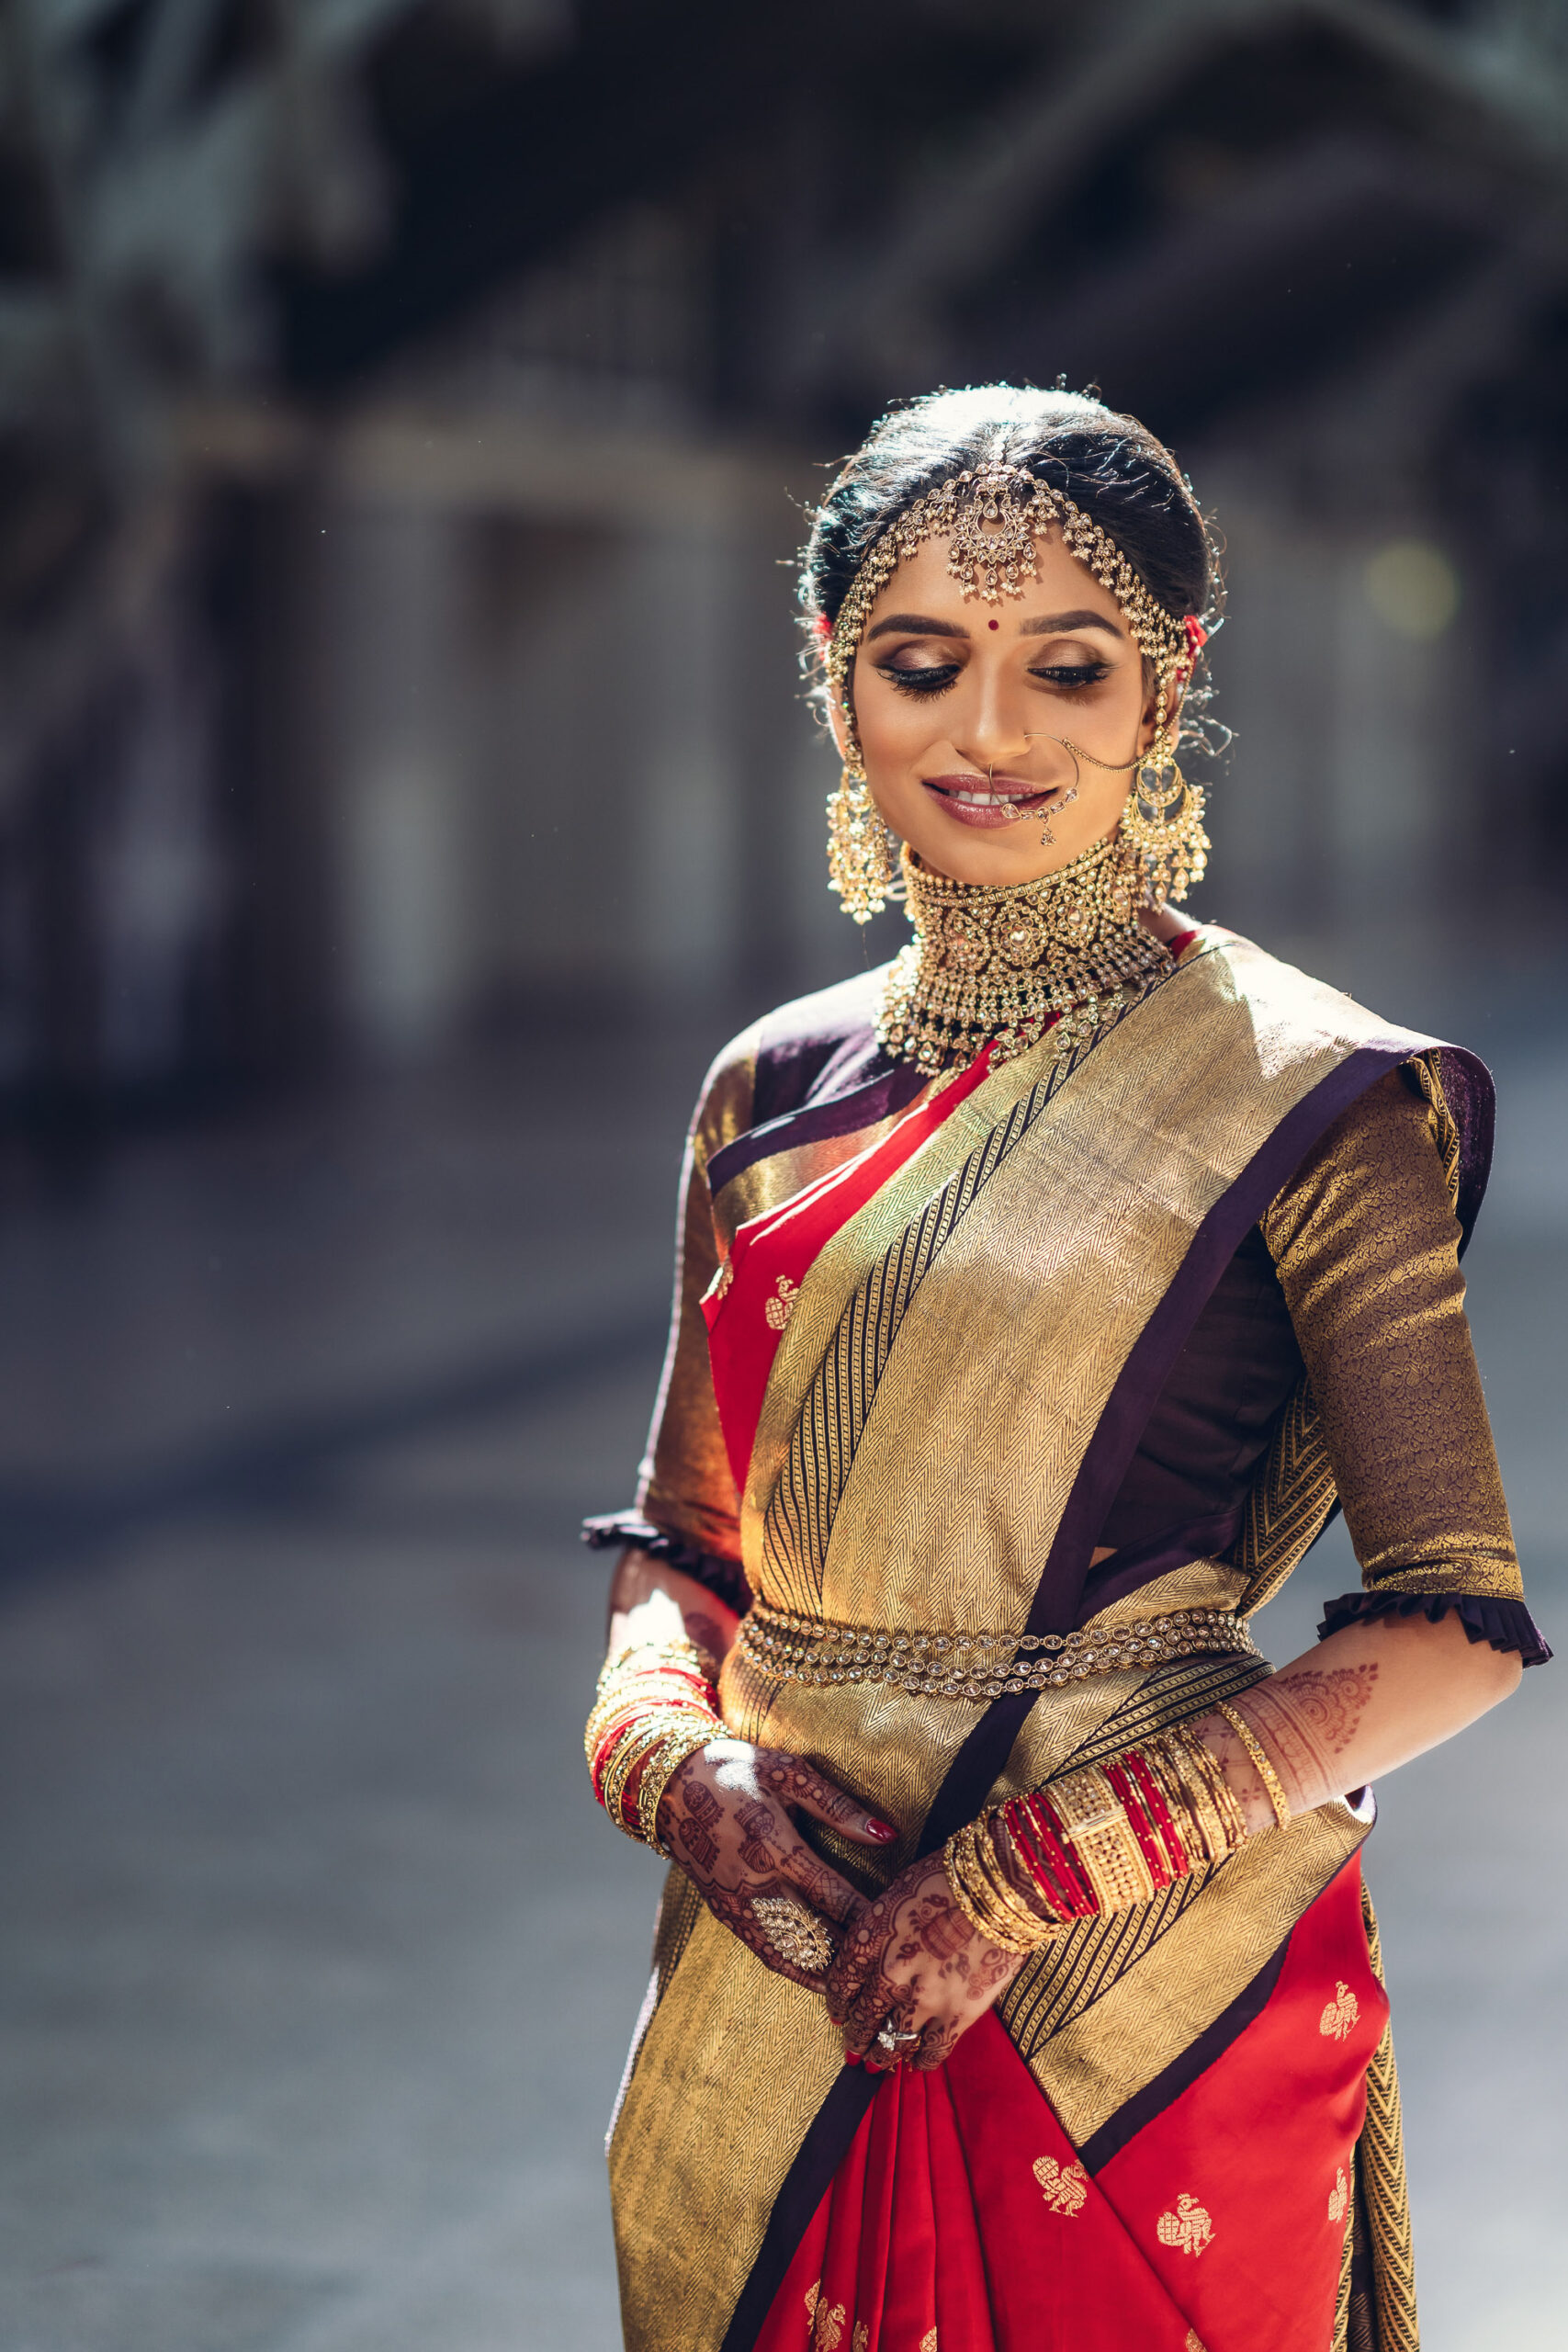 Chaitanya Sameer Modern Indian Wedding Splendid Photos Video 007 scaled